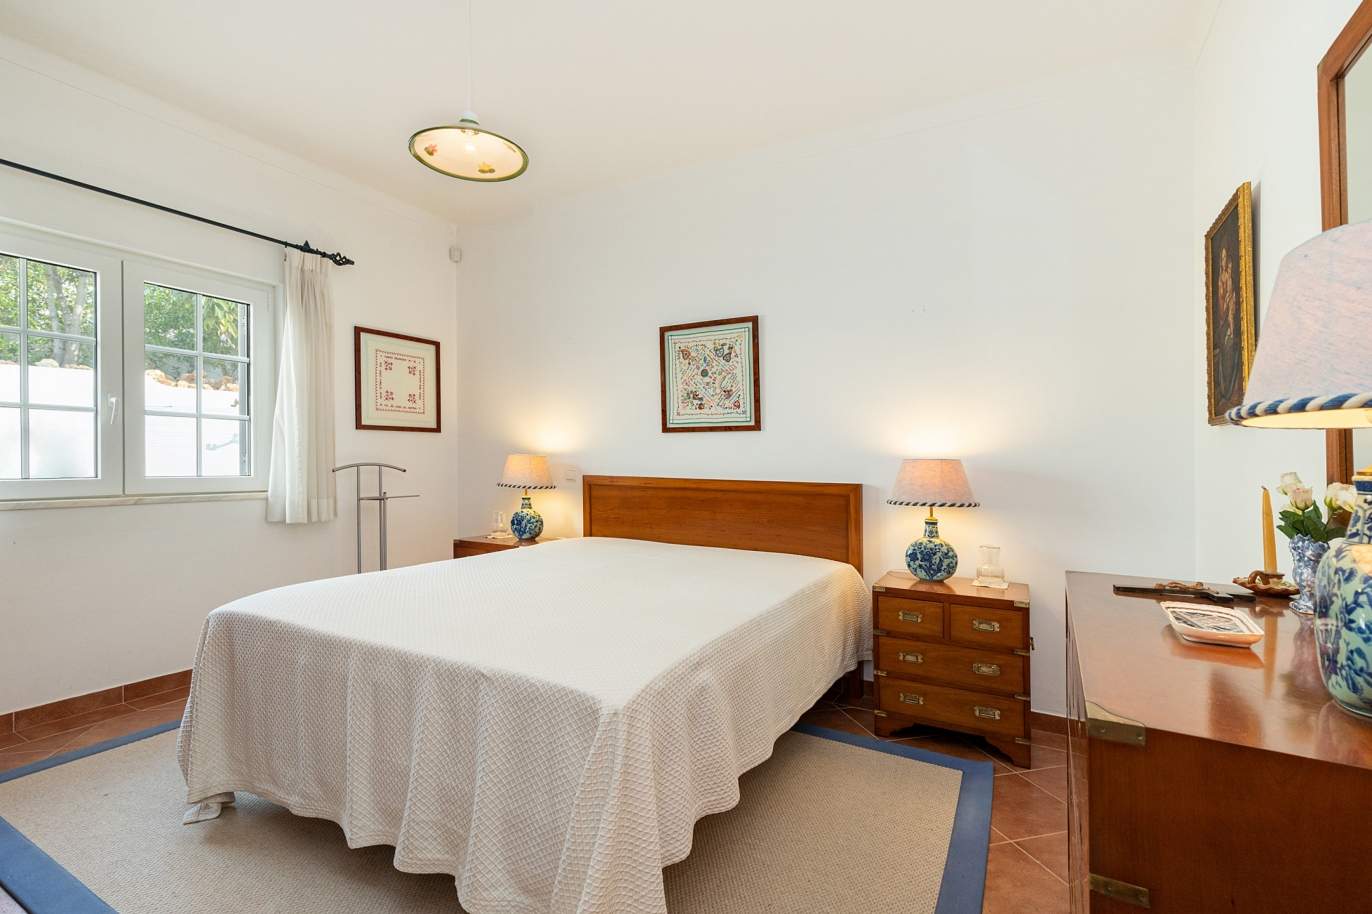 5 Bedroom Villa, near the beach, for sale in Carvoeiro, Algarve_191906